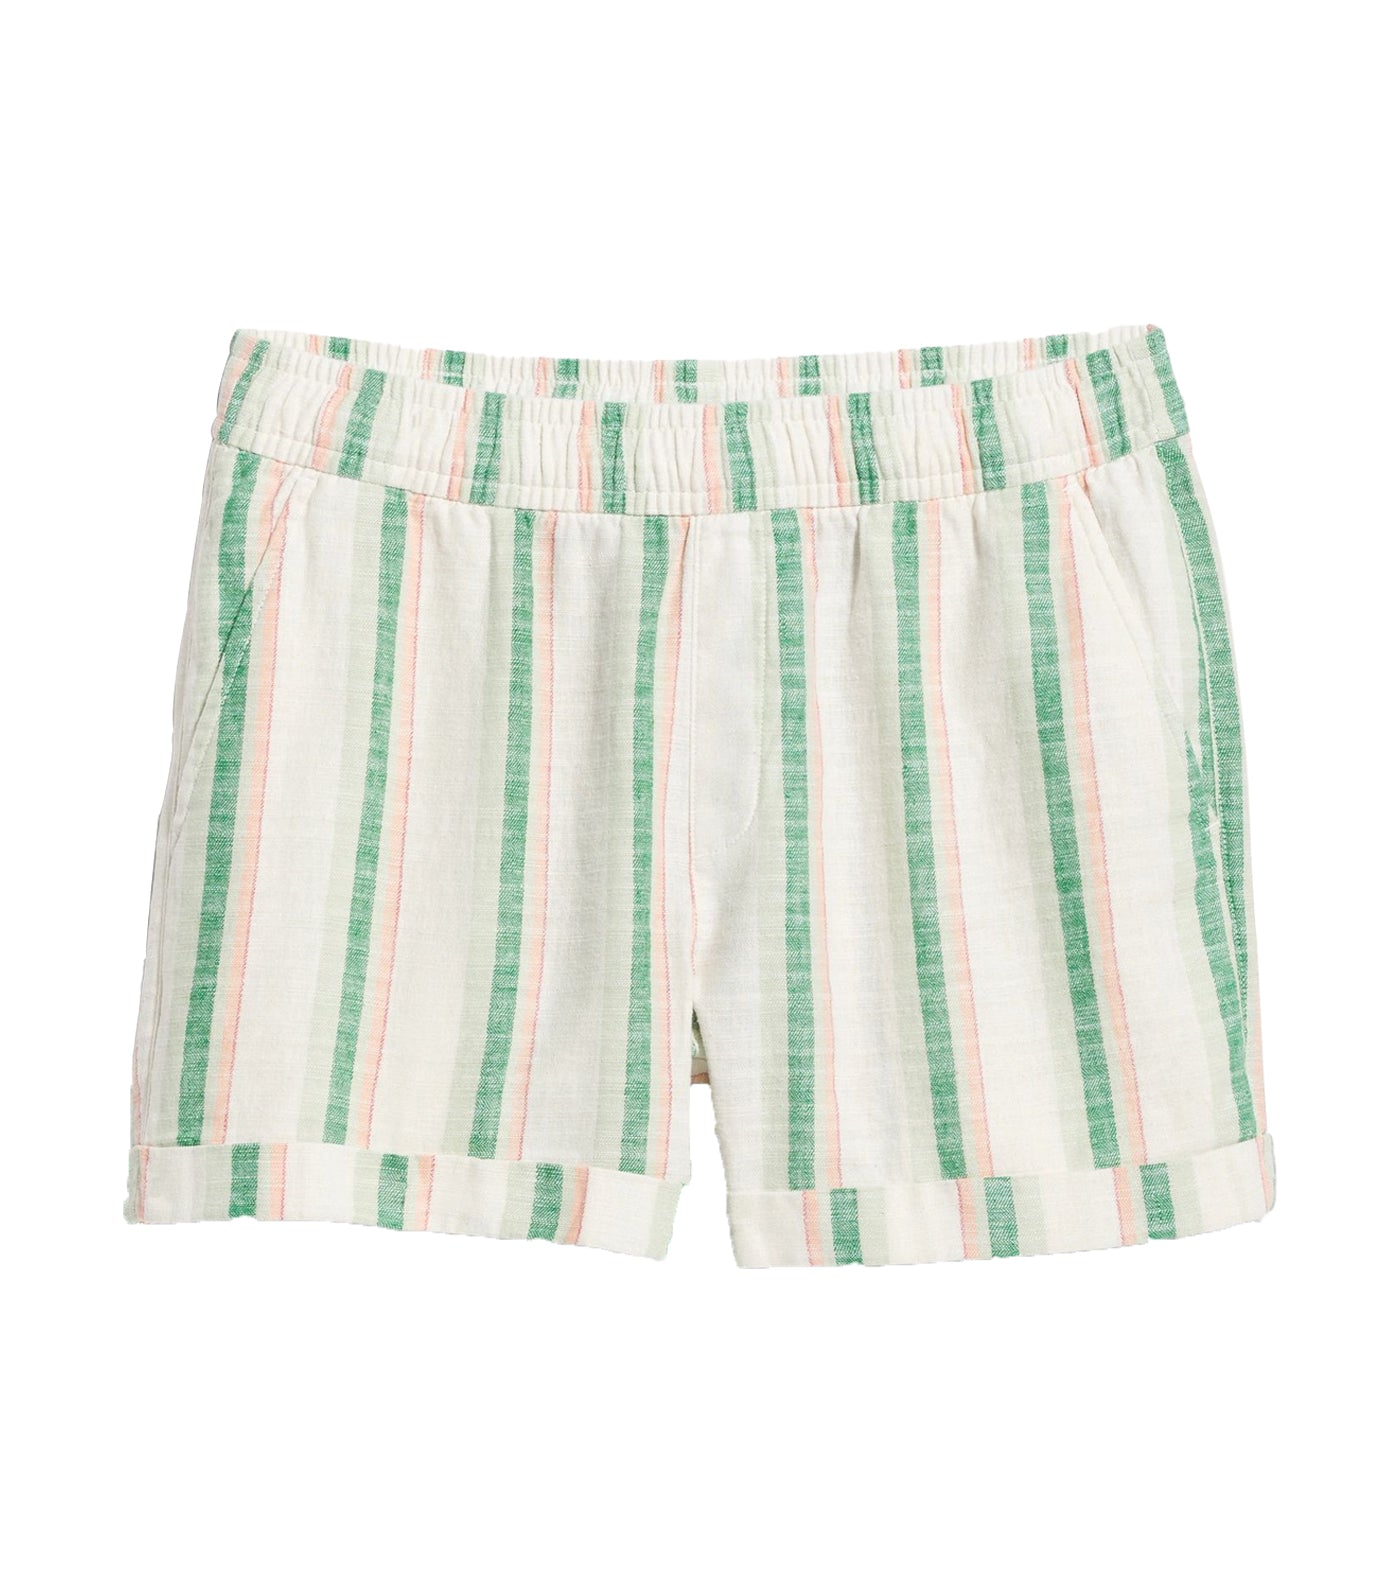 Matching High-Waisted Striped Linen-Blend Shorts for Women 3.5-Inch Inseam Green Multi Stripe